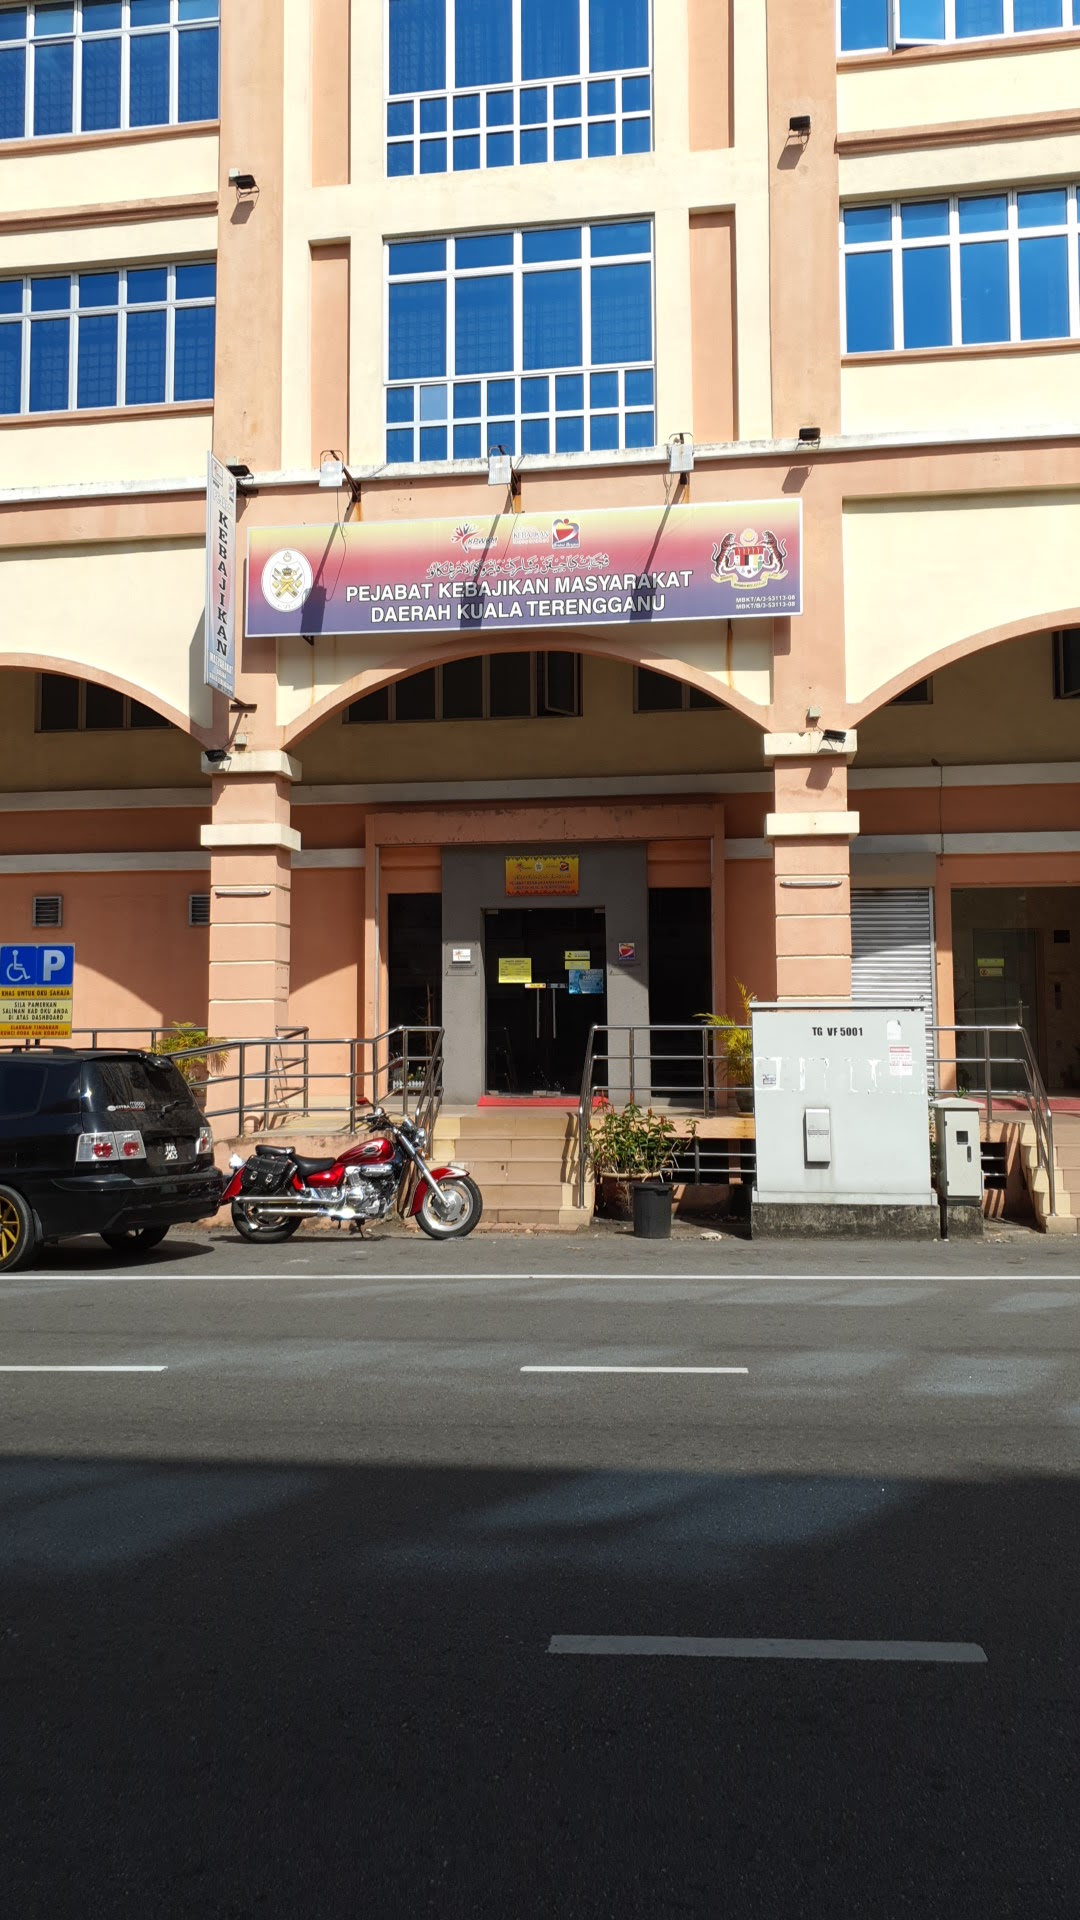 Pejabat Kebajikan Masyarakat Kuala Terengganu Di Bandar Kuala Terengganu